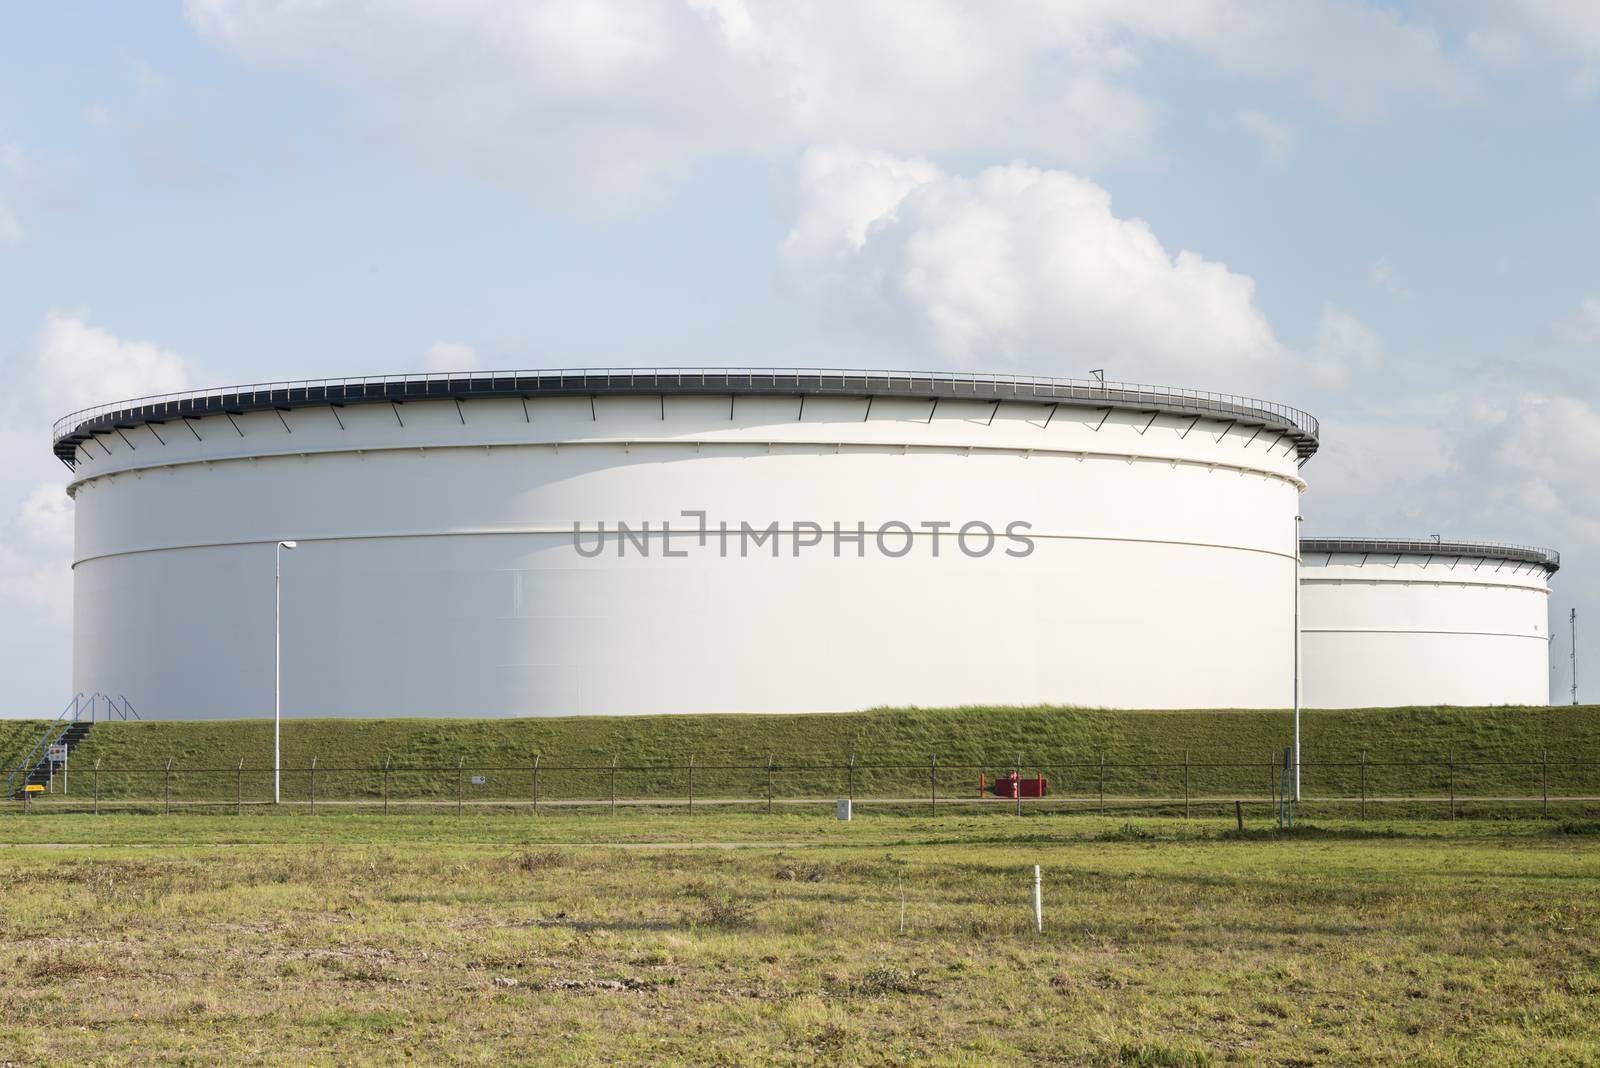 oil storage tanks by compuinfoto